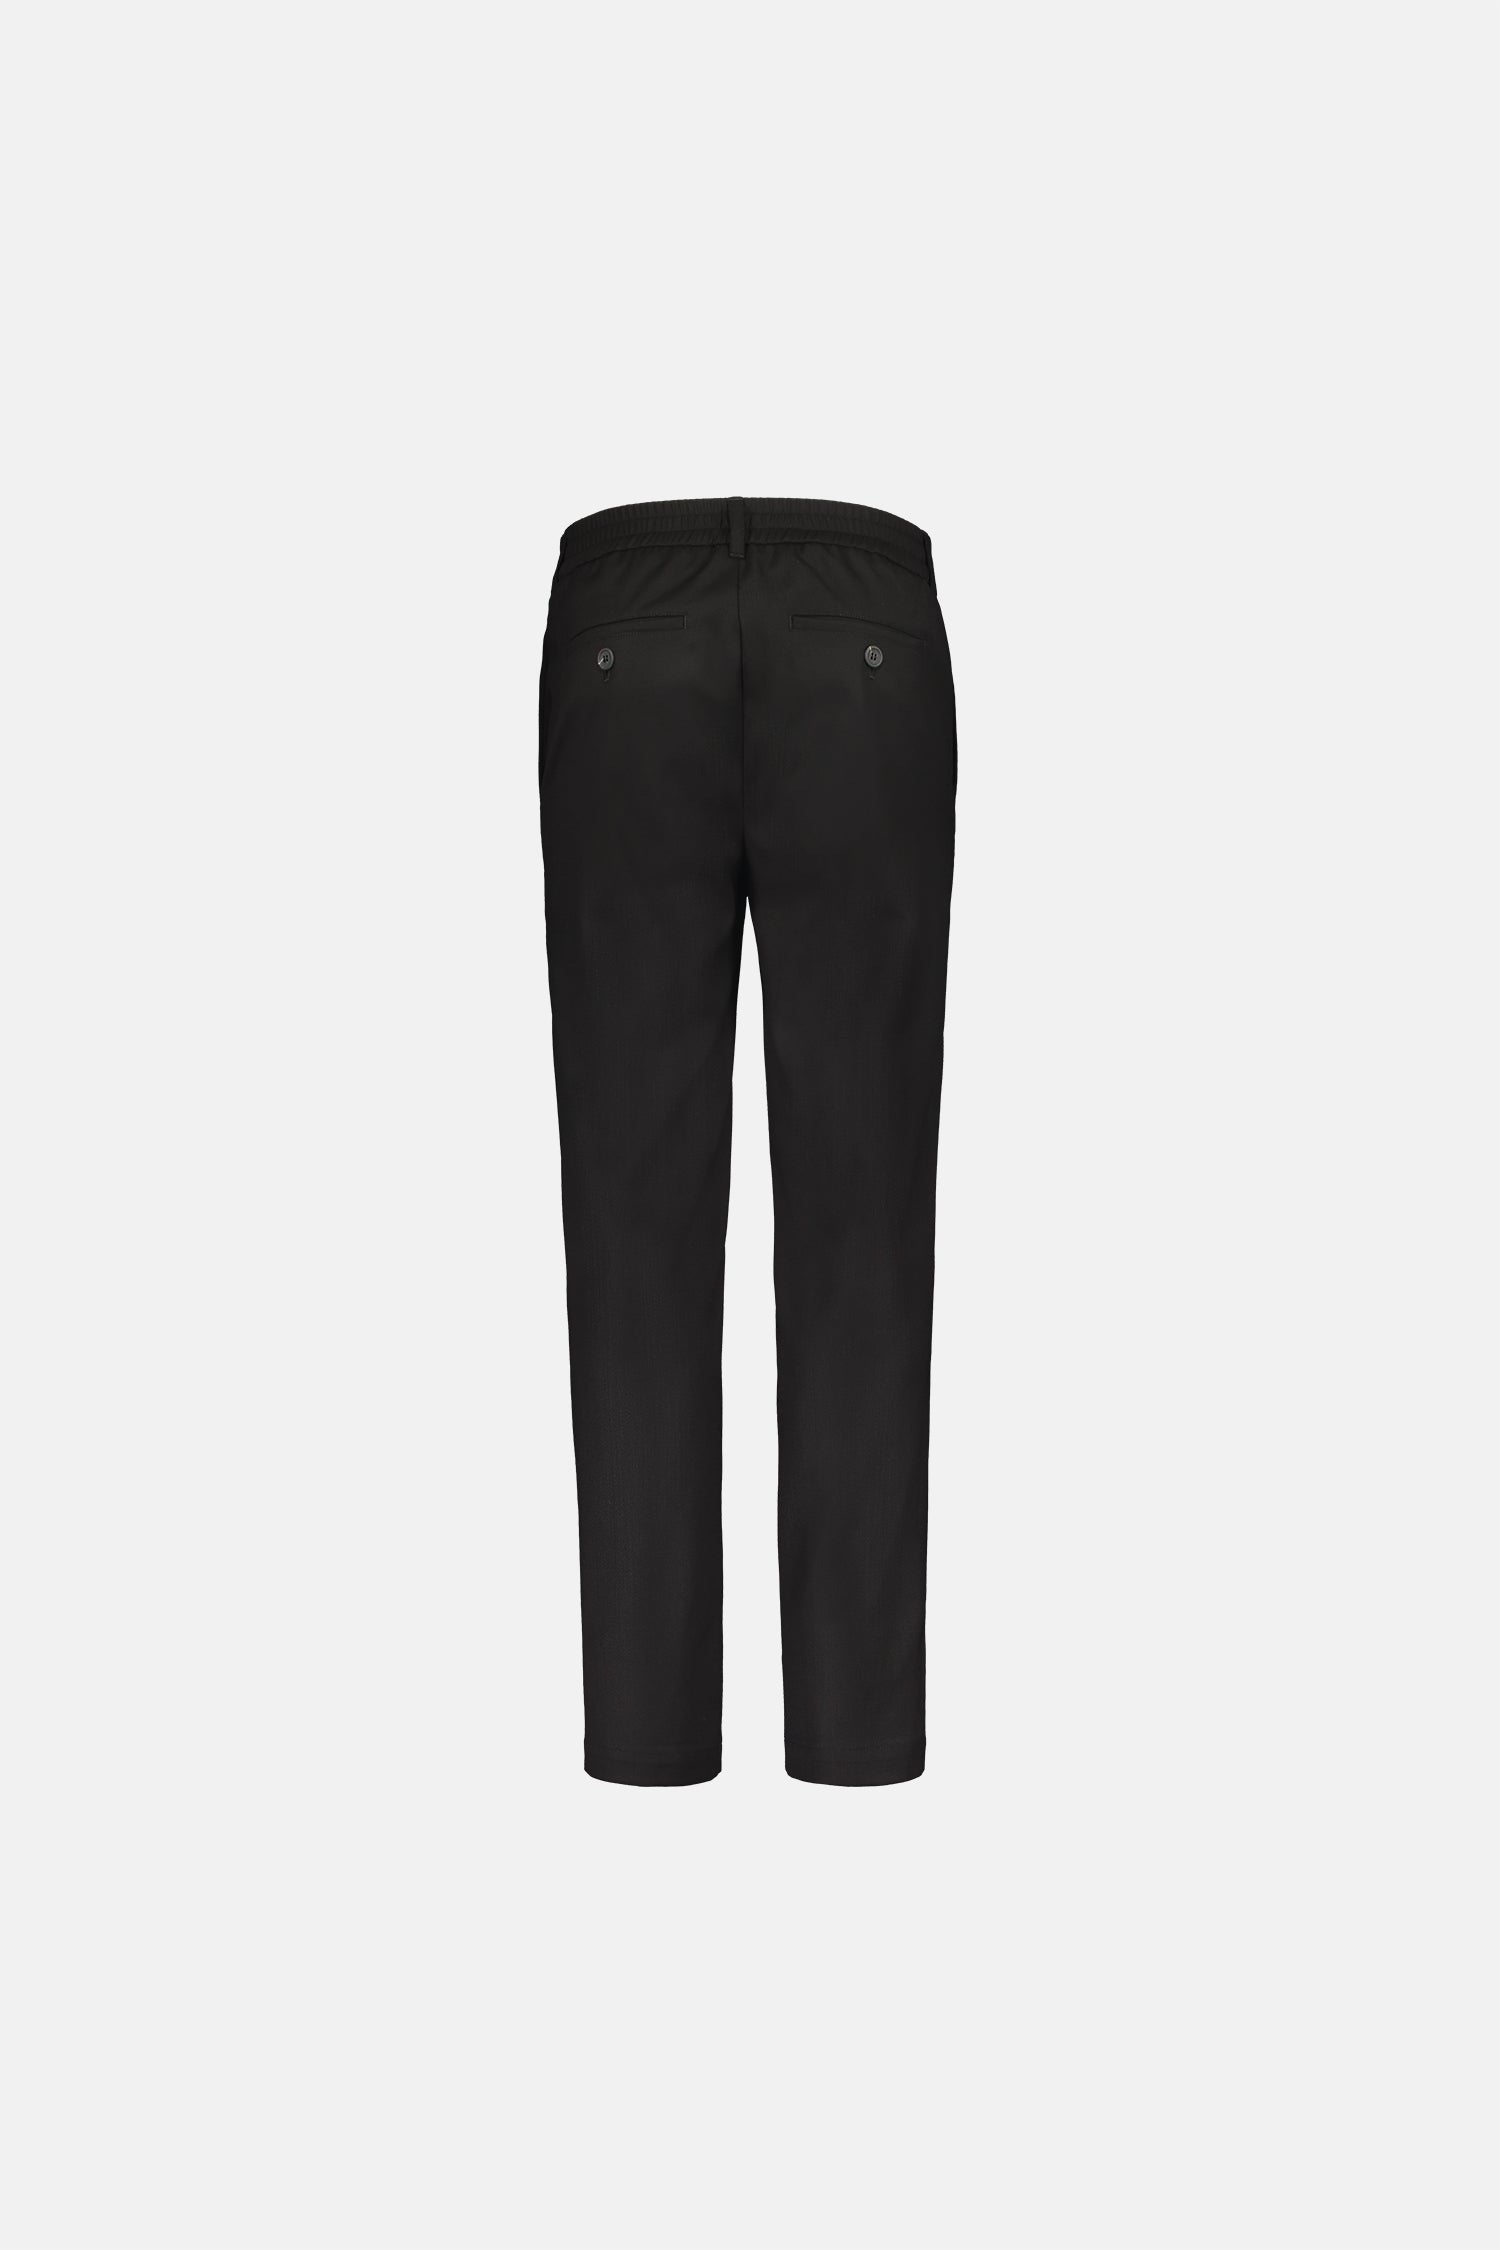 Frenn Seppo comfortable premium quality sustainable wool trousers black